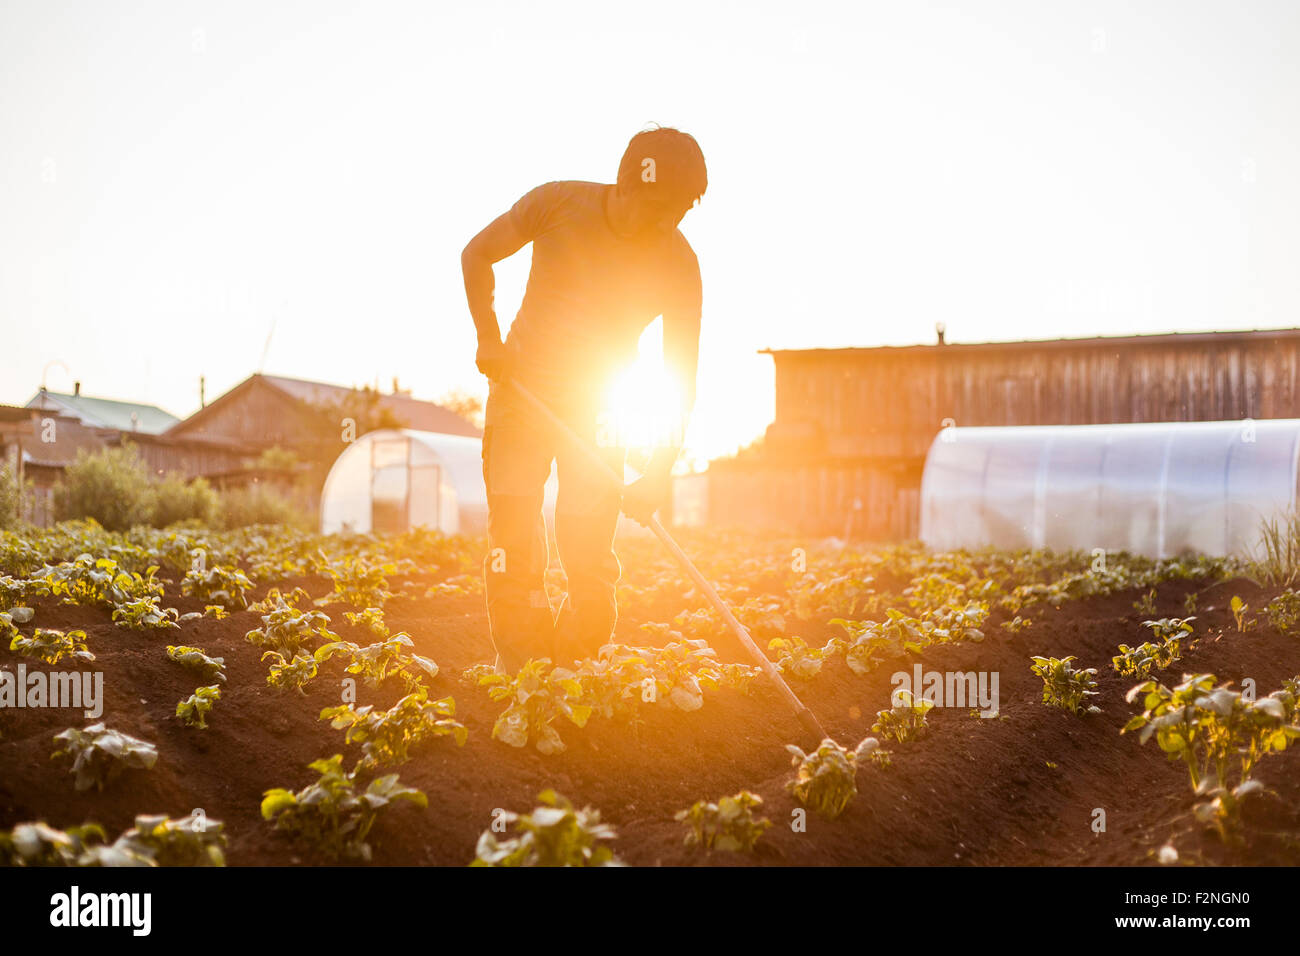 Mari farmer tending to crops in rural field Stock Photo